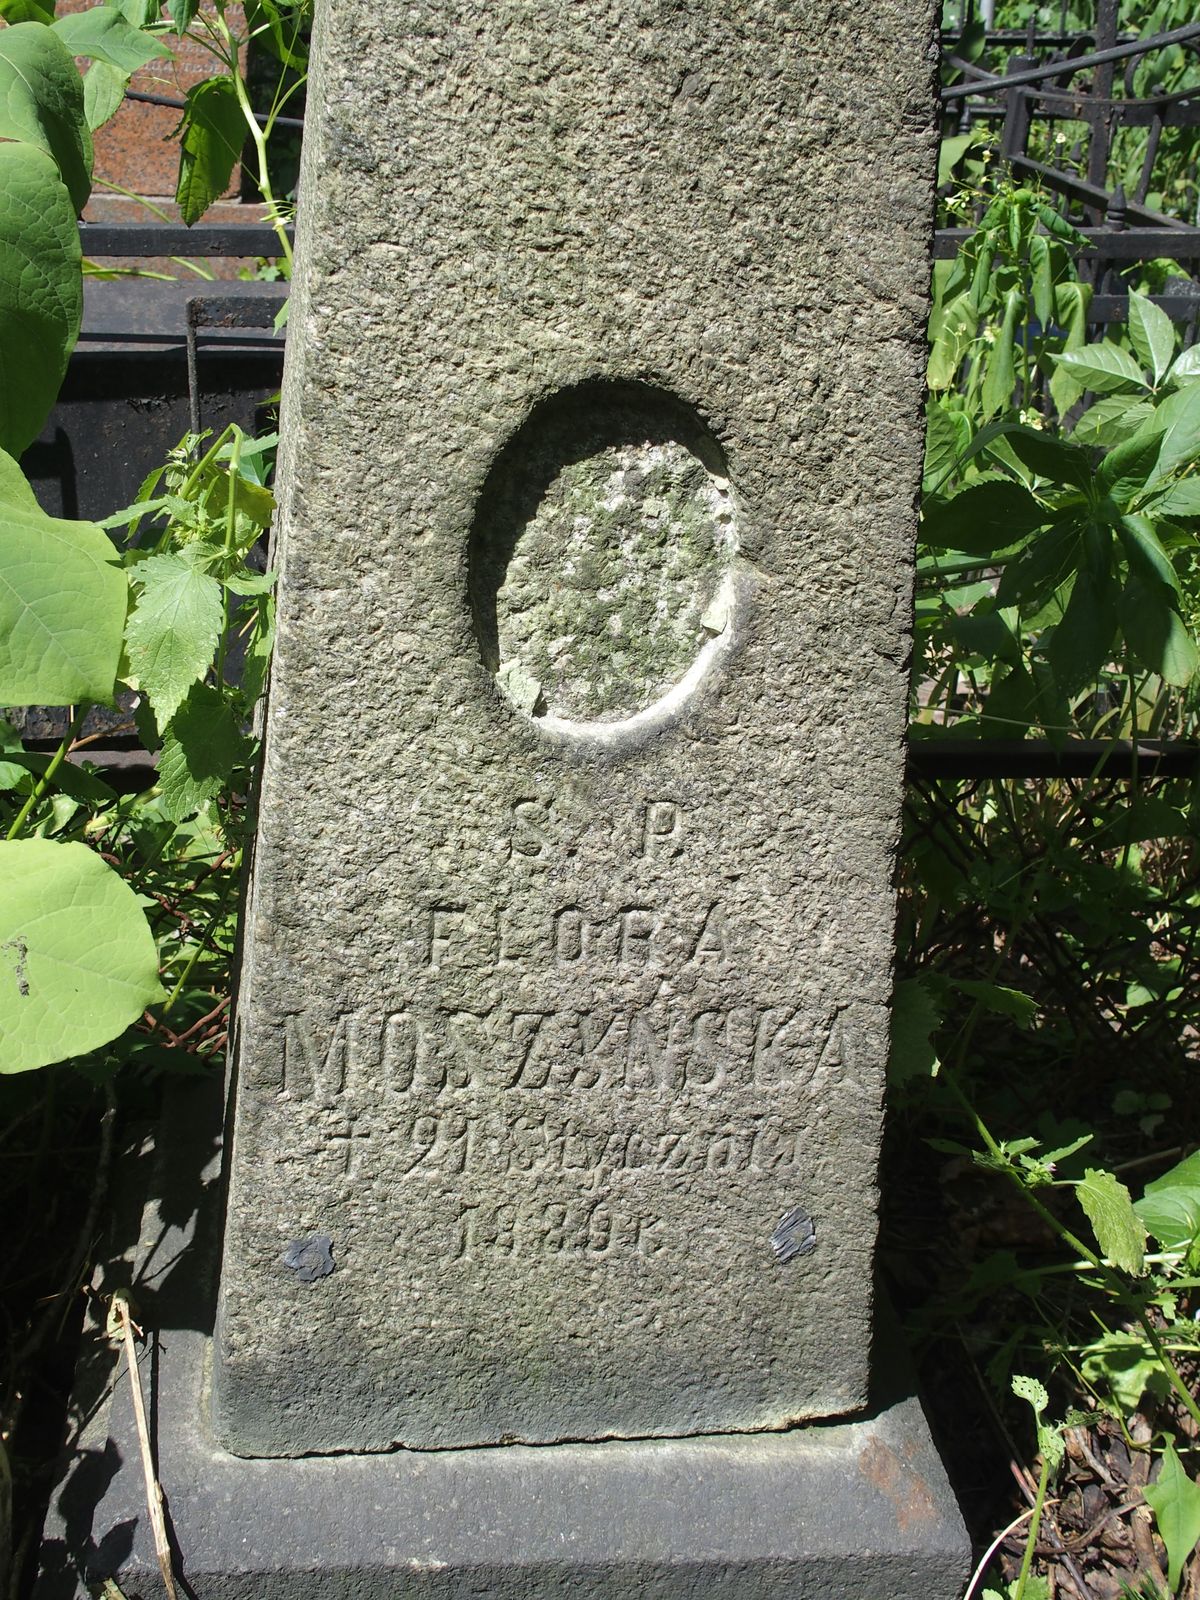 Inscription from the tombstone of Flora Moszyńska